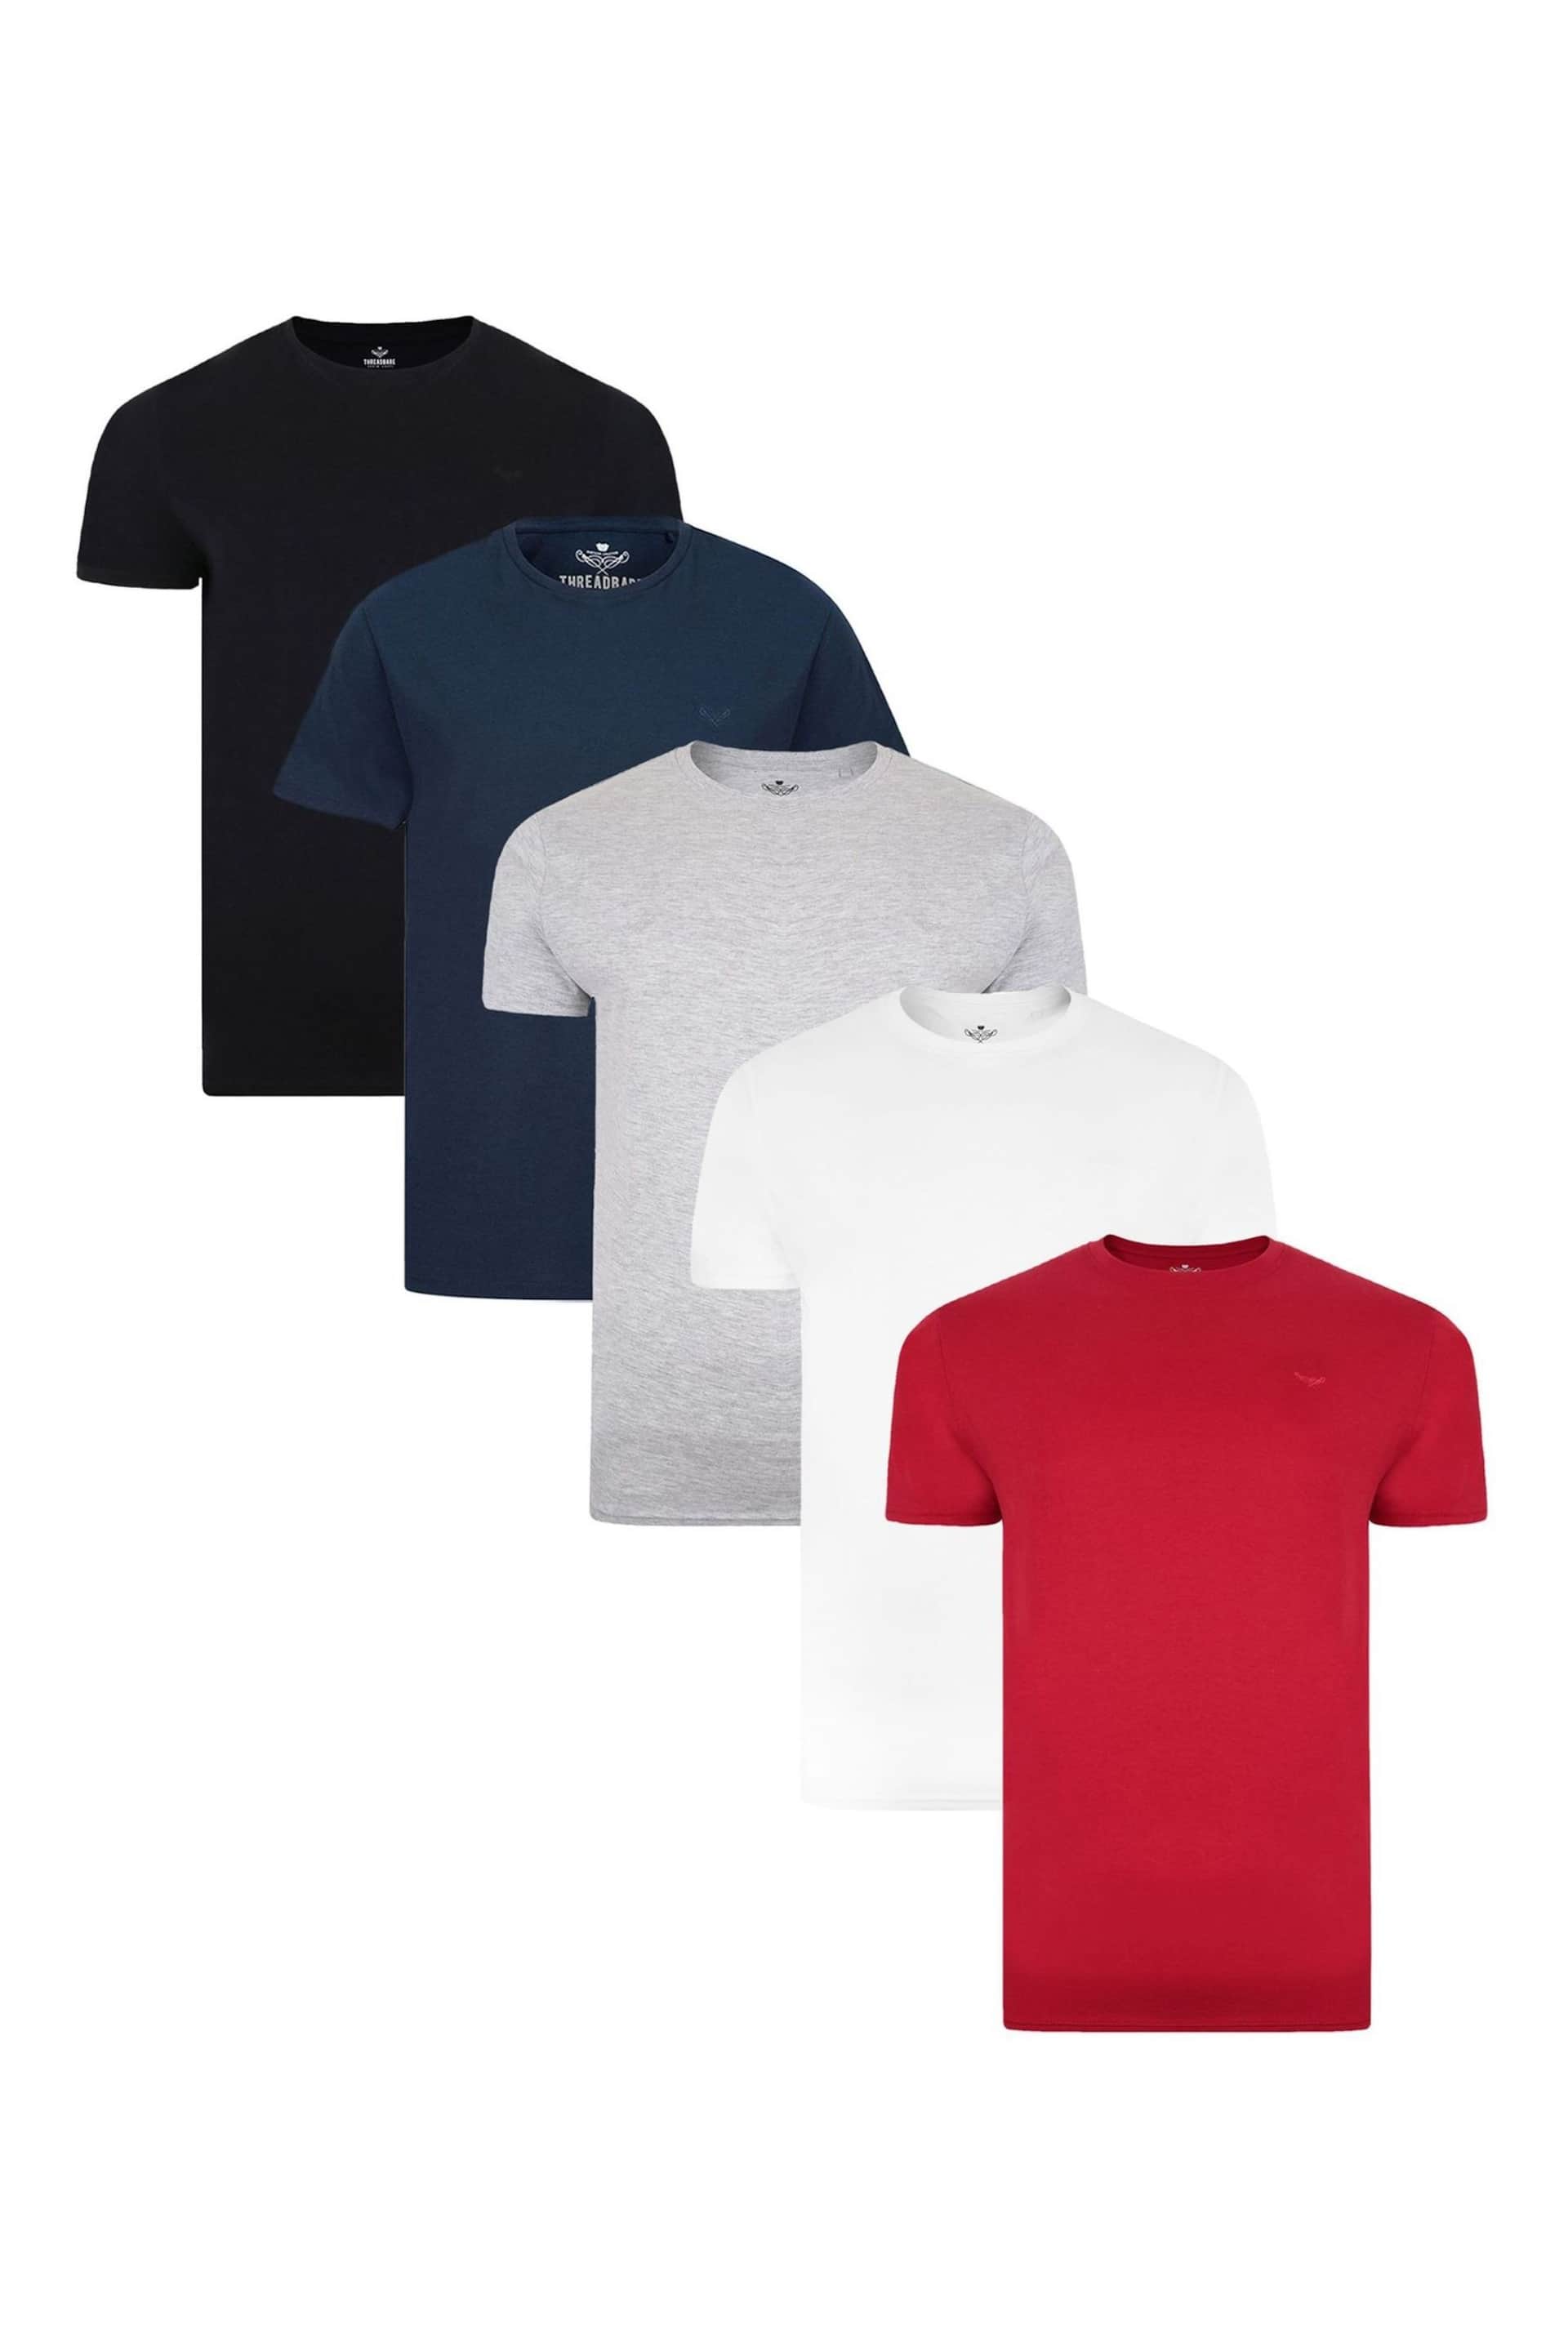 Threadbare Black Assorted T-Shirts 5 Pack - Image 1 of 3